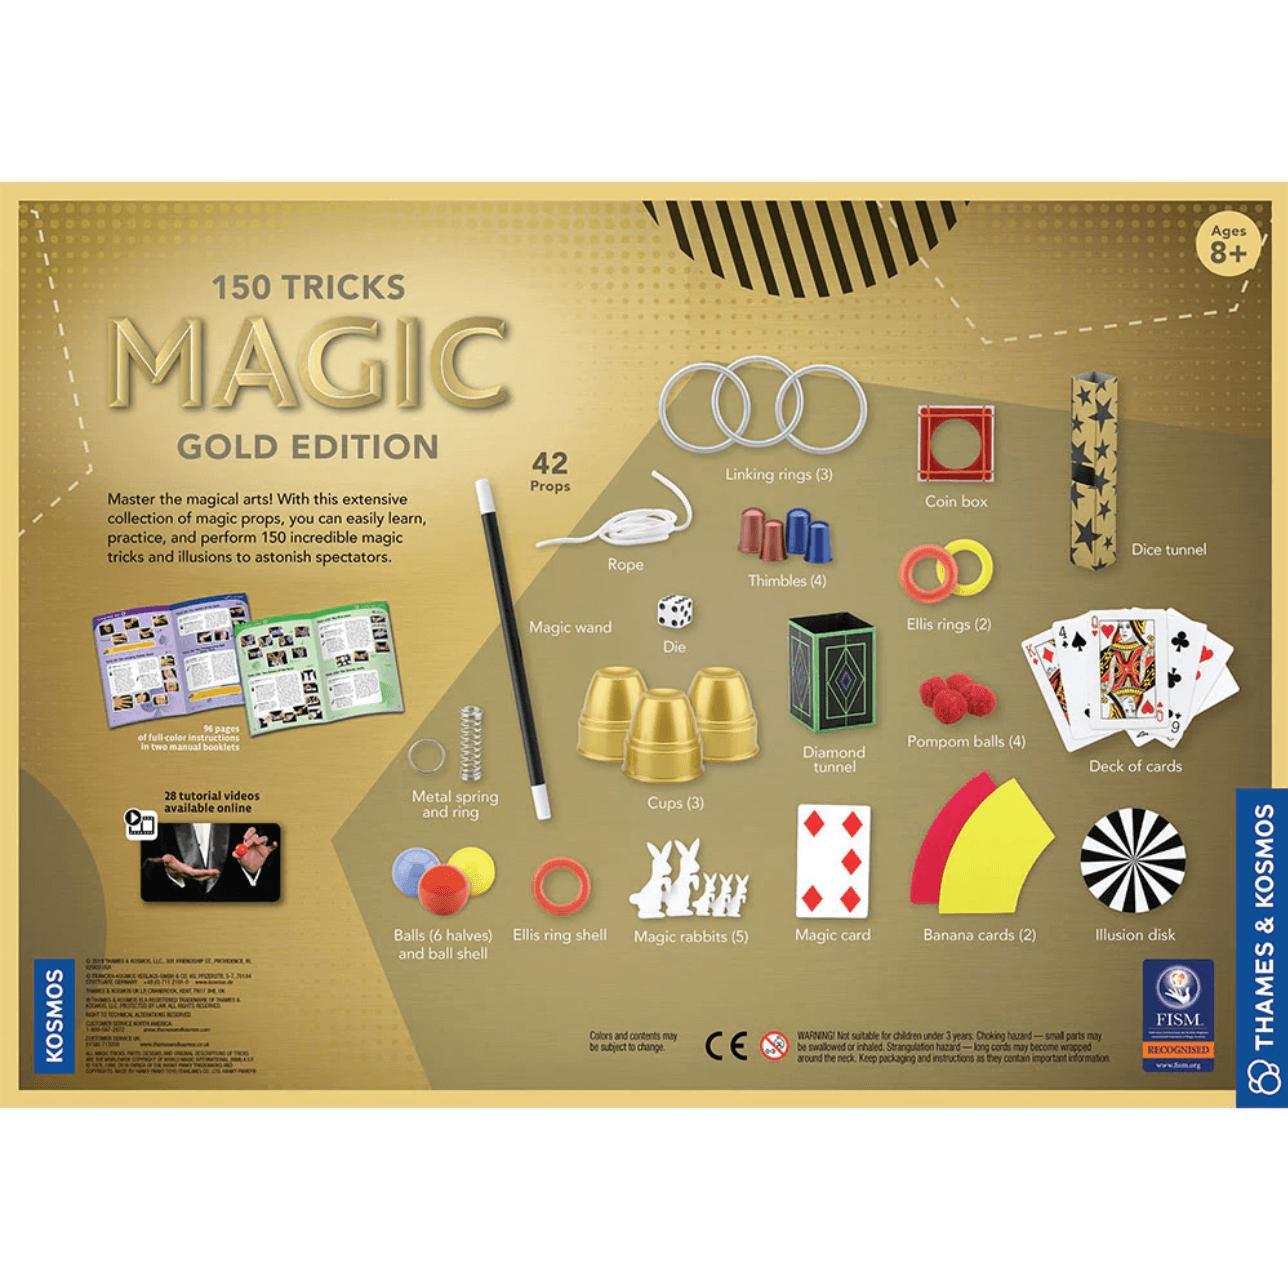 Magic Tricks Set: Gold Edition Games Thames & Kosmos Prettycleanshop